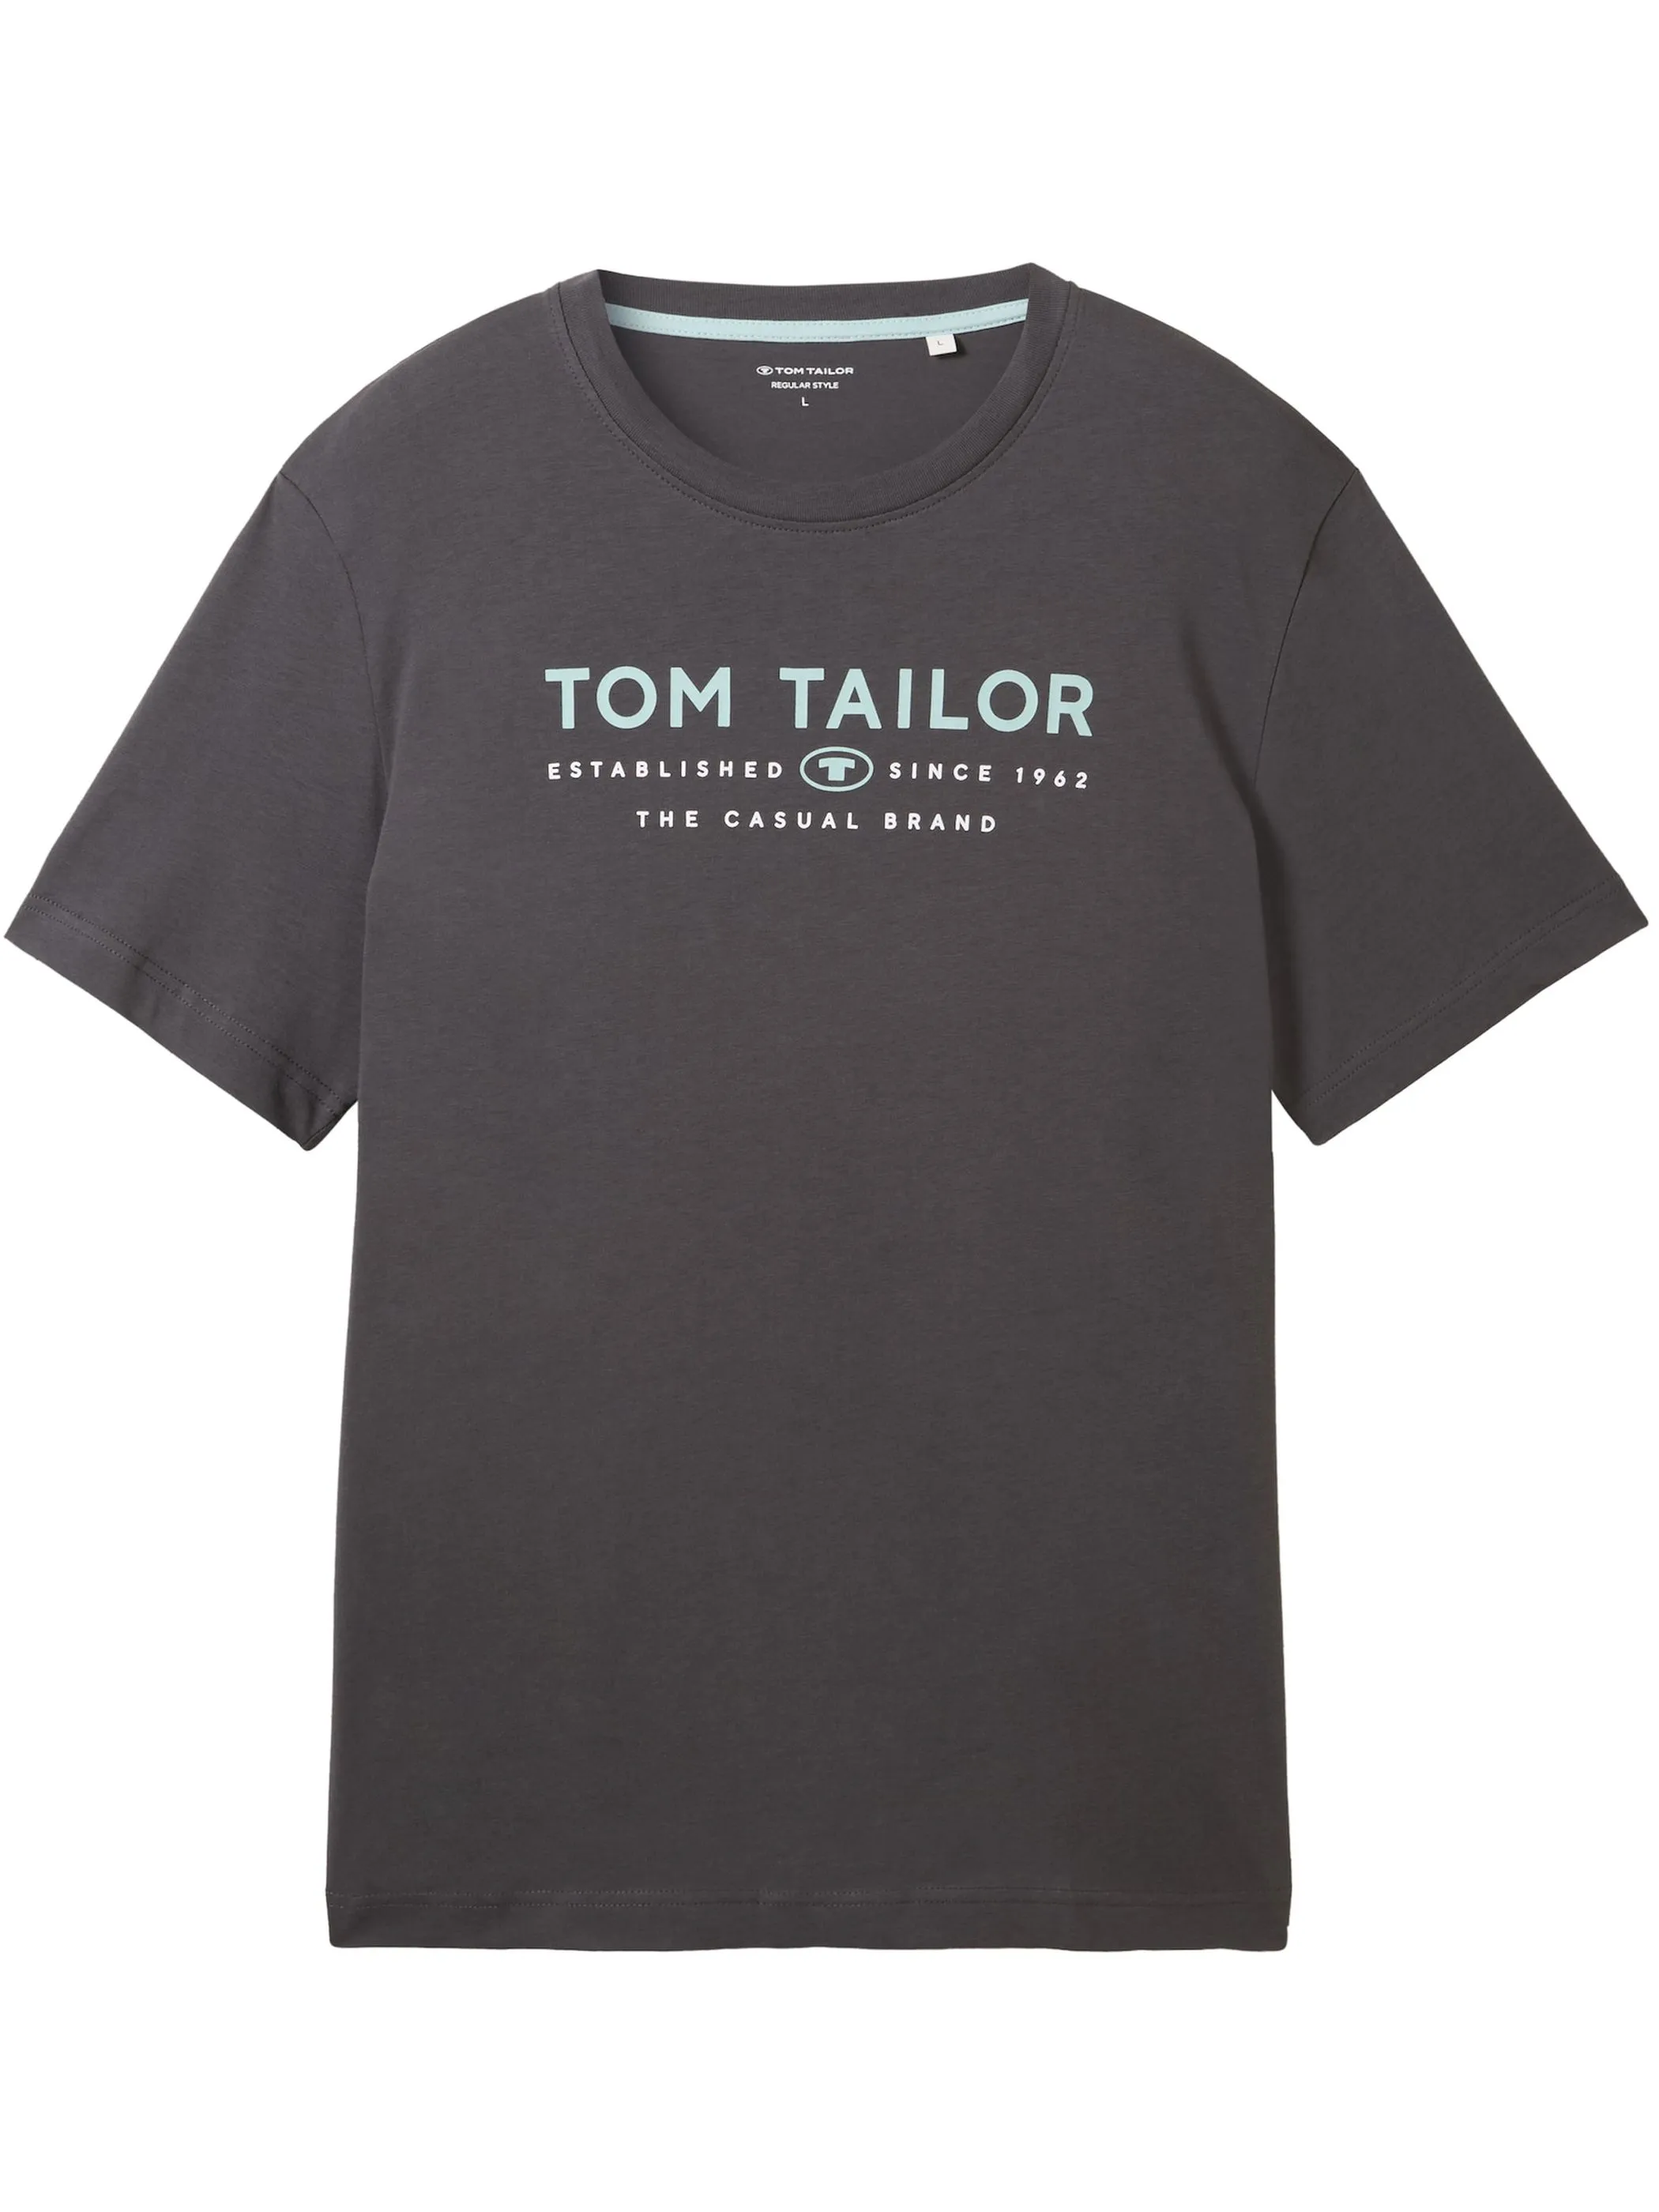 Tom Tailor 1043276 t-shirt with print Grau 898849 10899 1